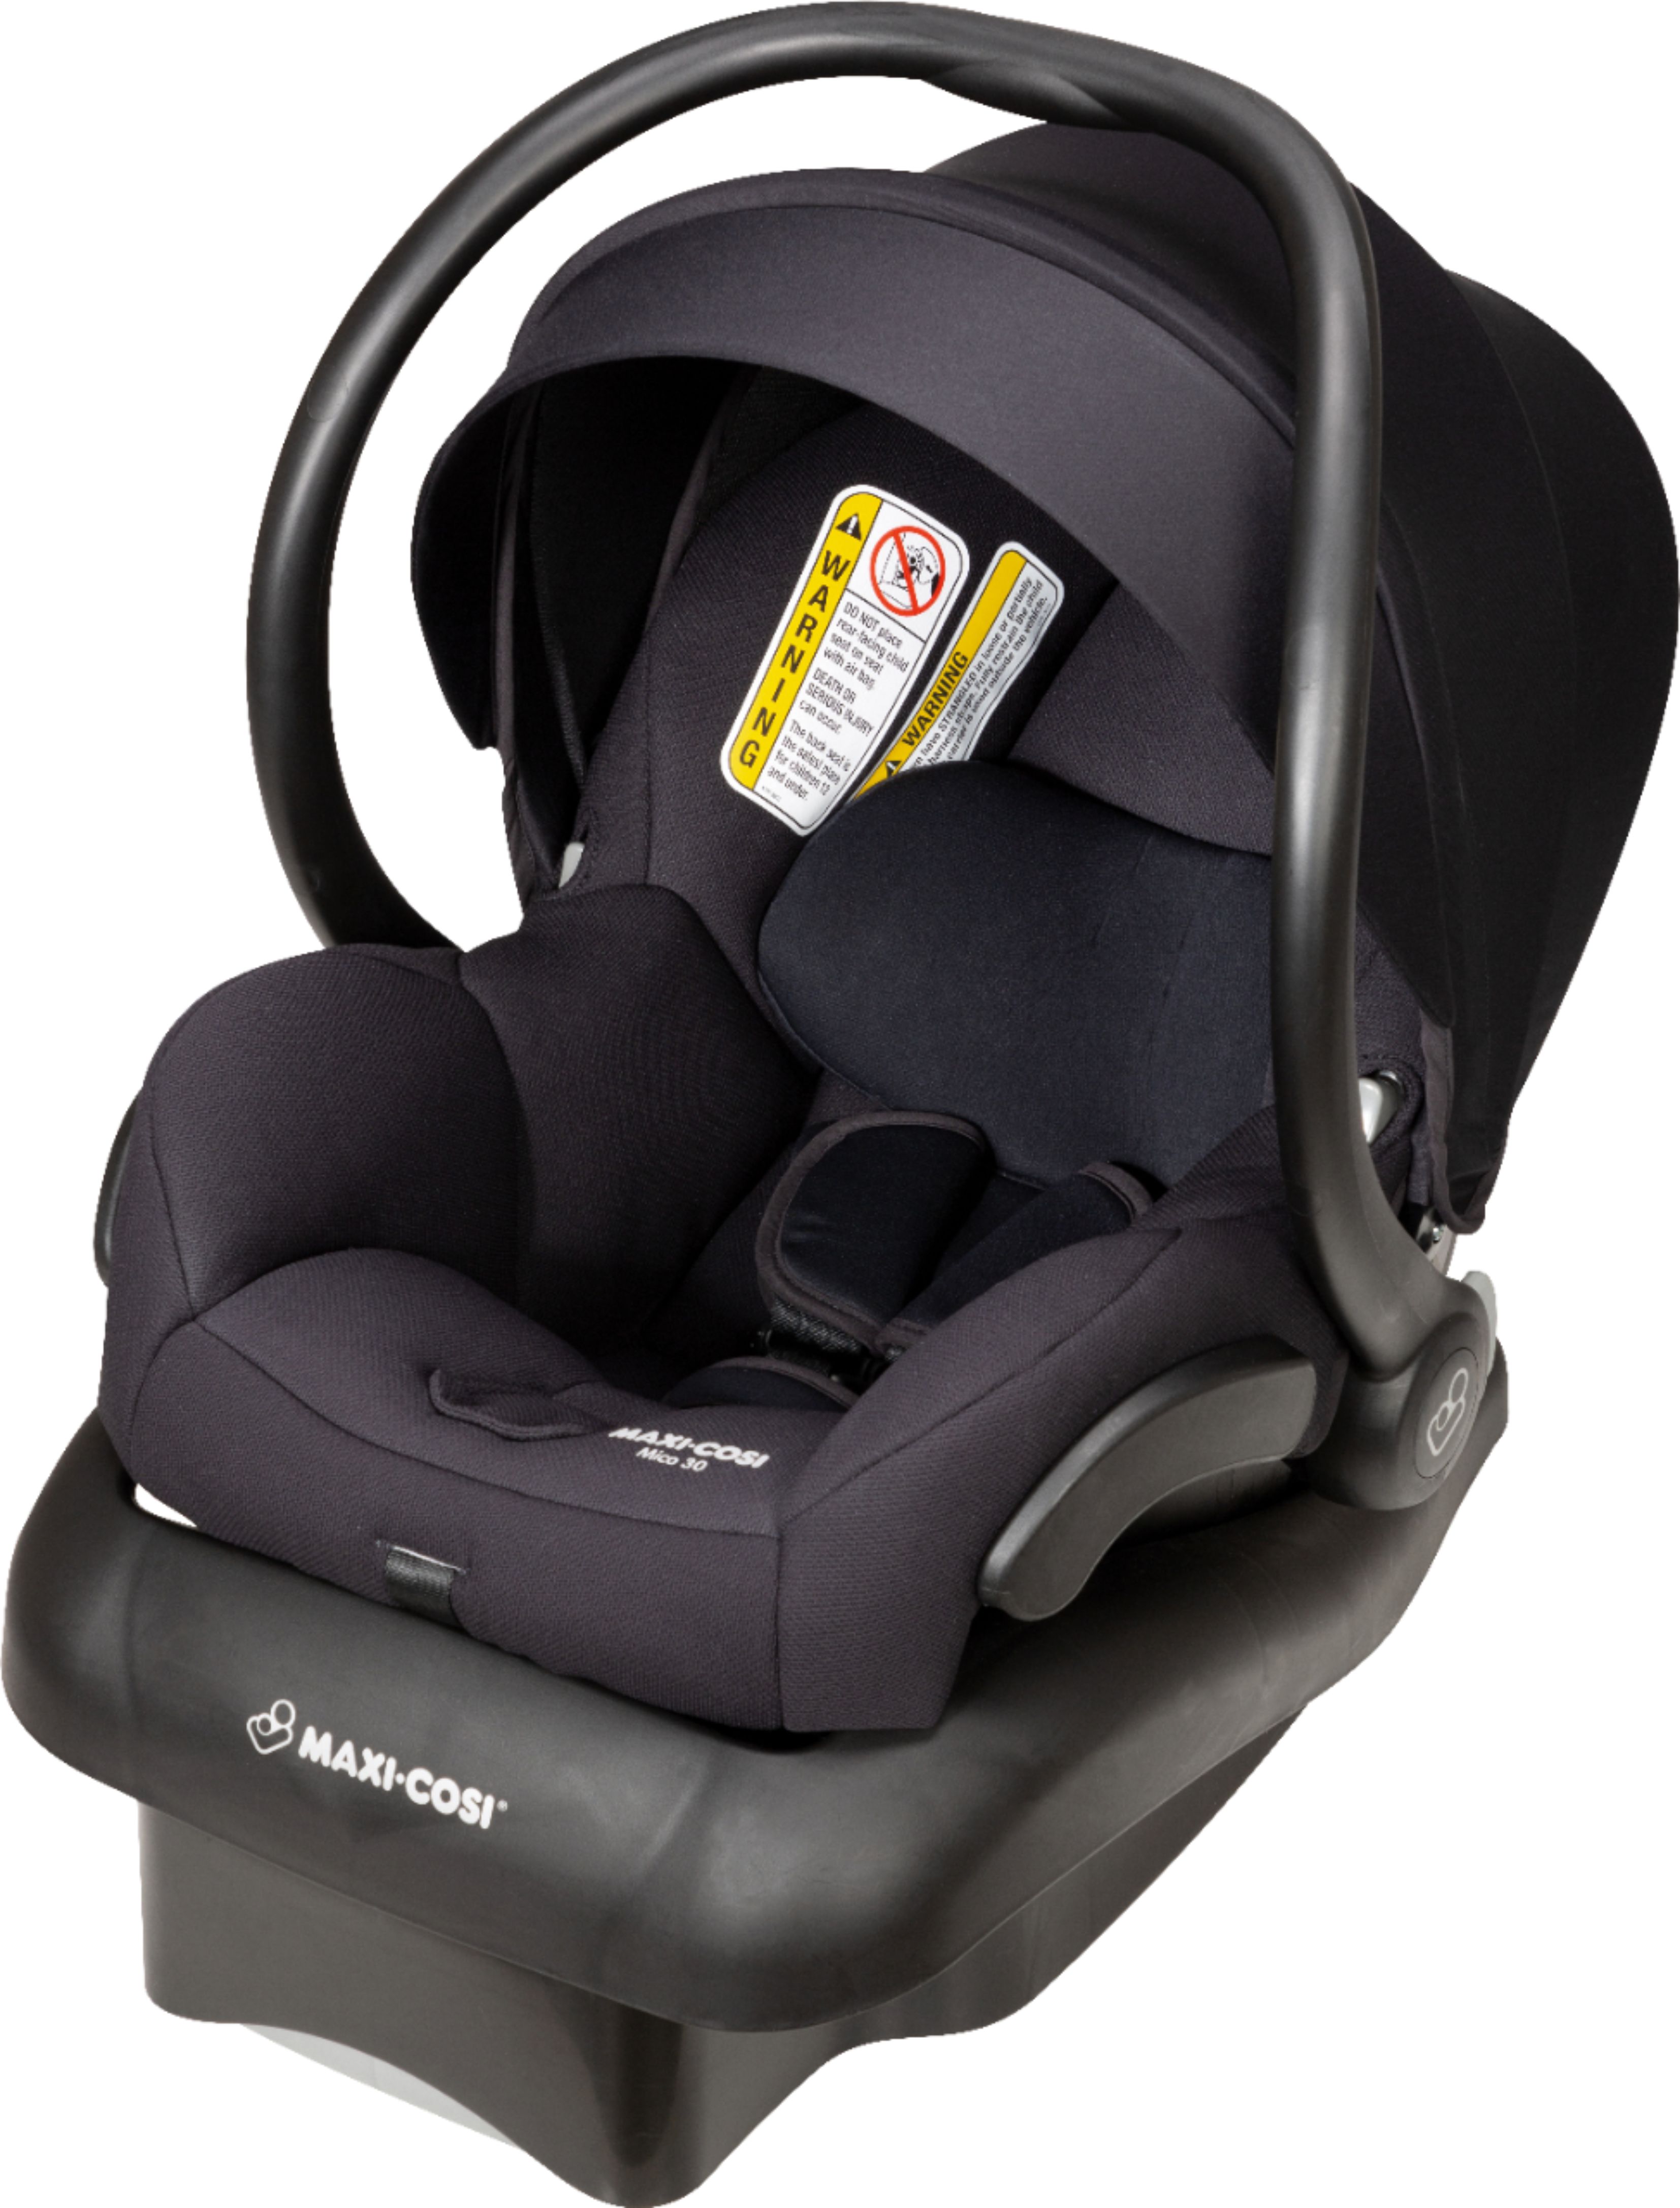 Maxi Cosi Mico 30 Infant Car Seat Black Ic301emja Best - Maxi Cosi Mico 30 Car Seat Weight Limit